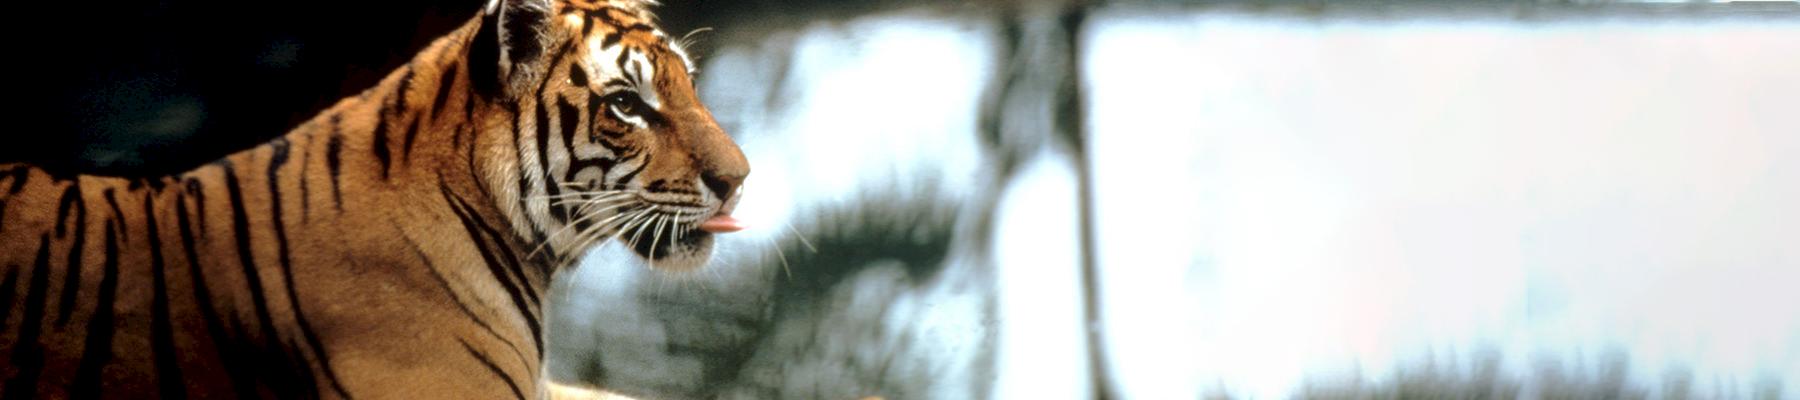 Sumatran tiger Panthera tigris sumatrae © Howard Buffett / WWF-US